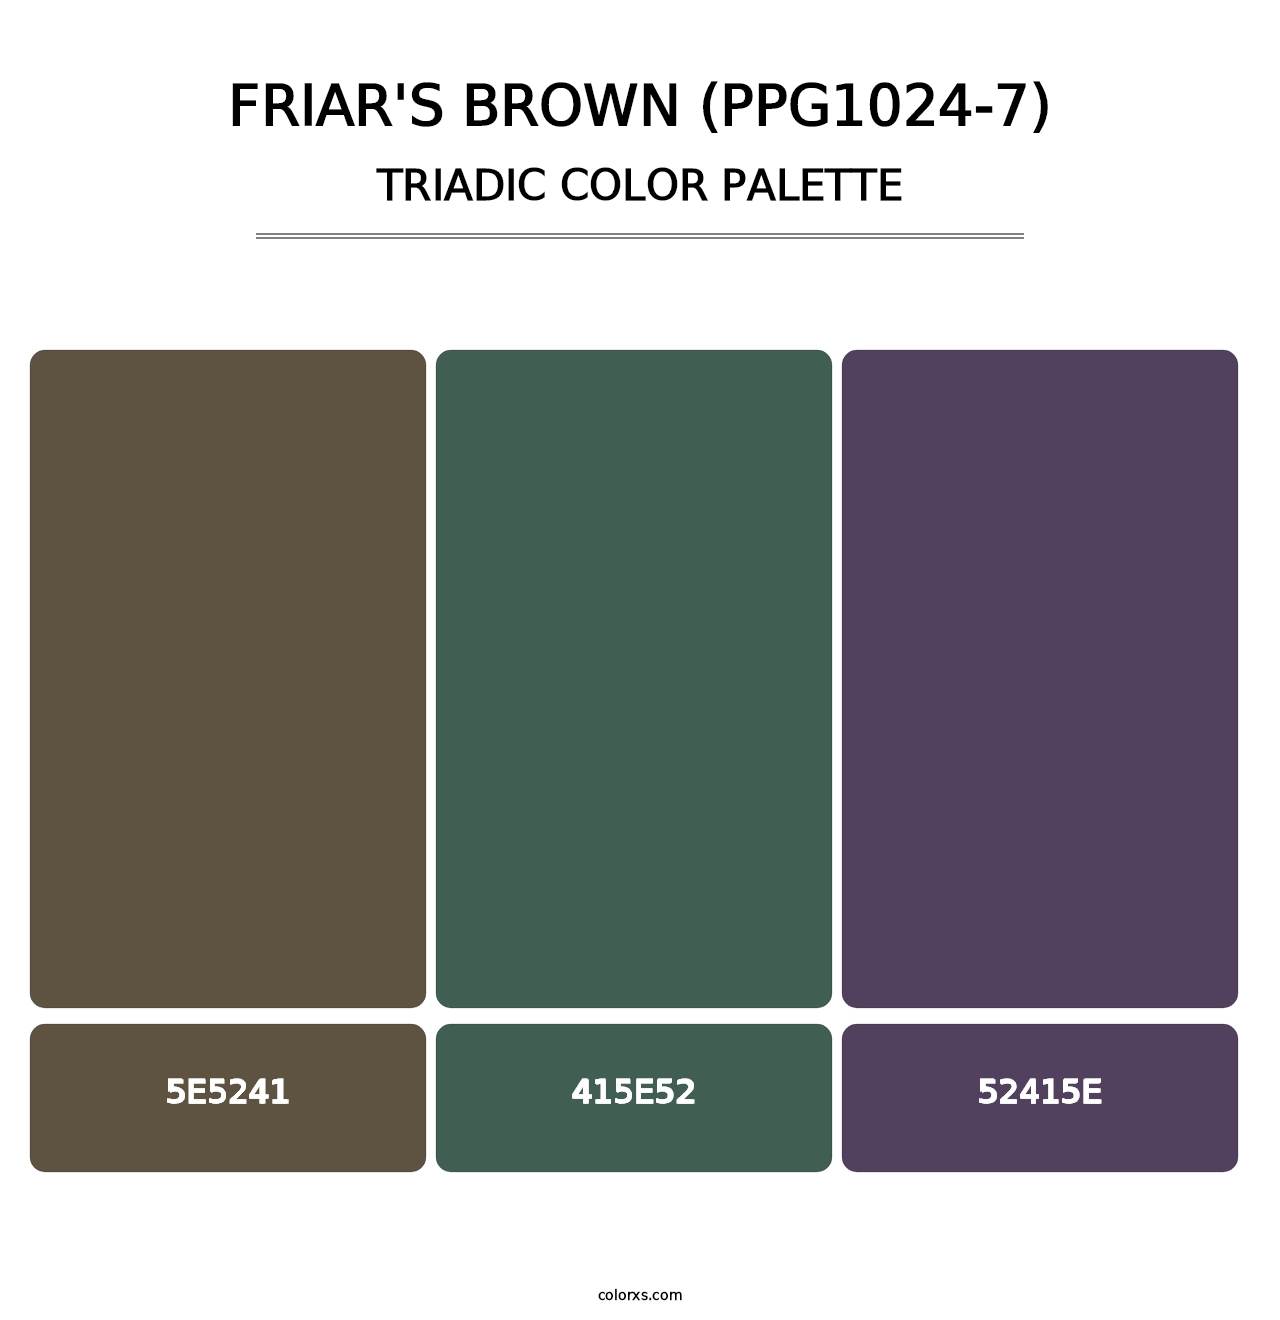 Friar's Brown (PPG1024-7) - Triadic Color Palette